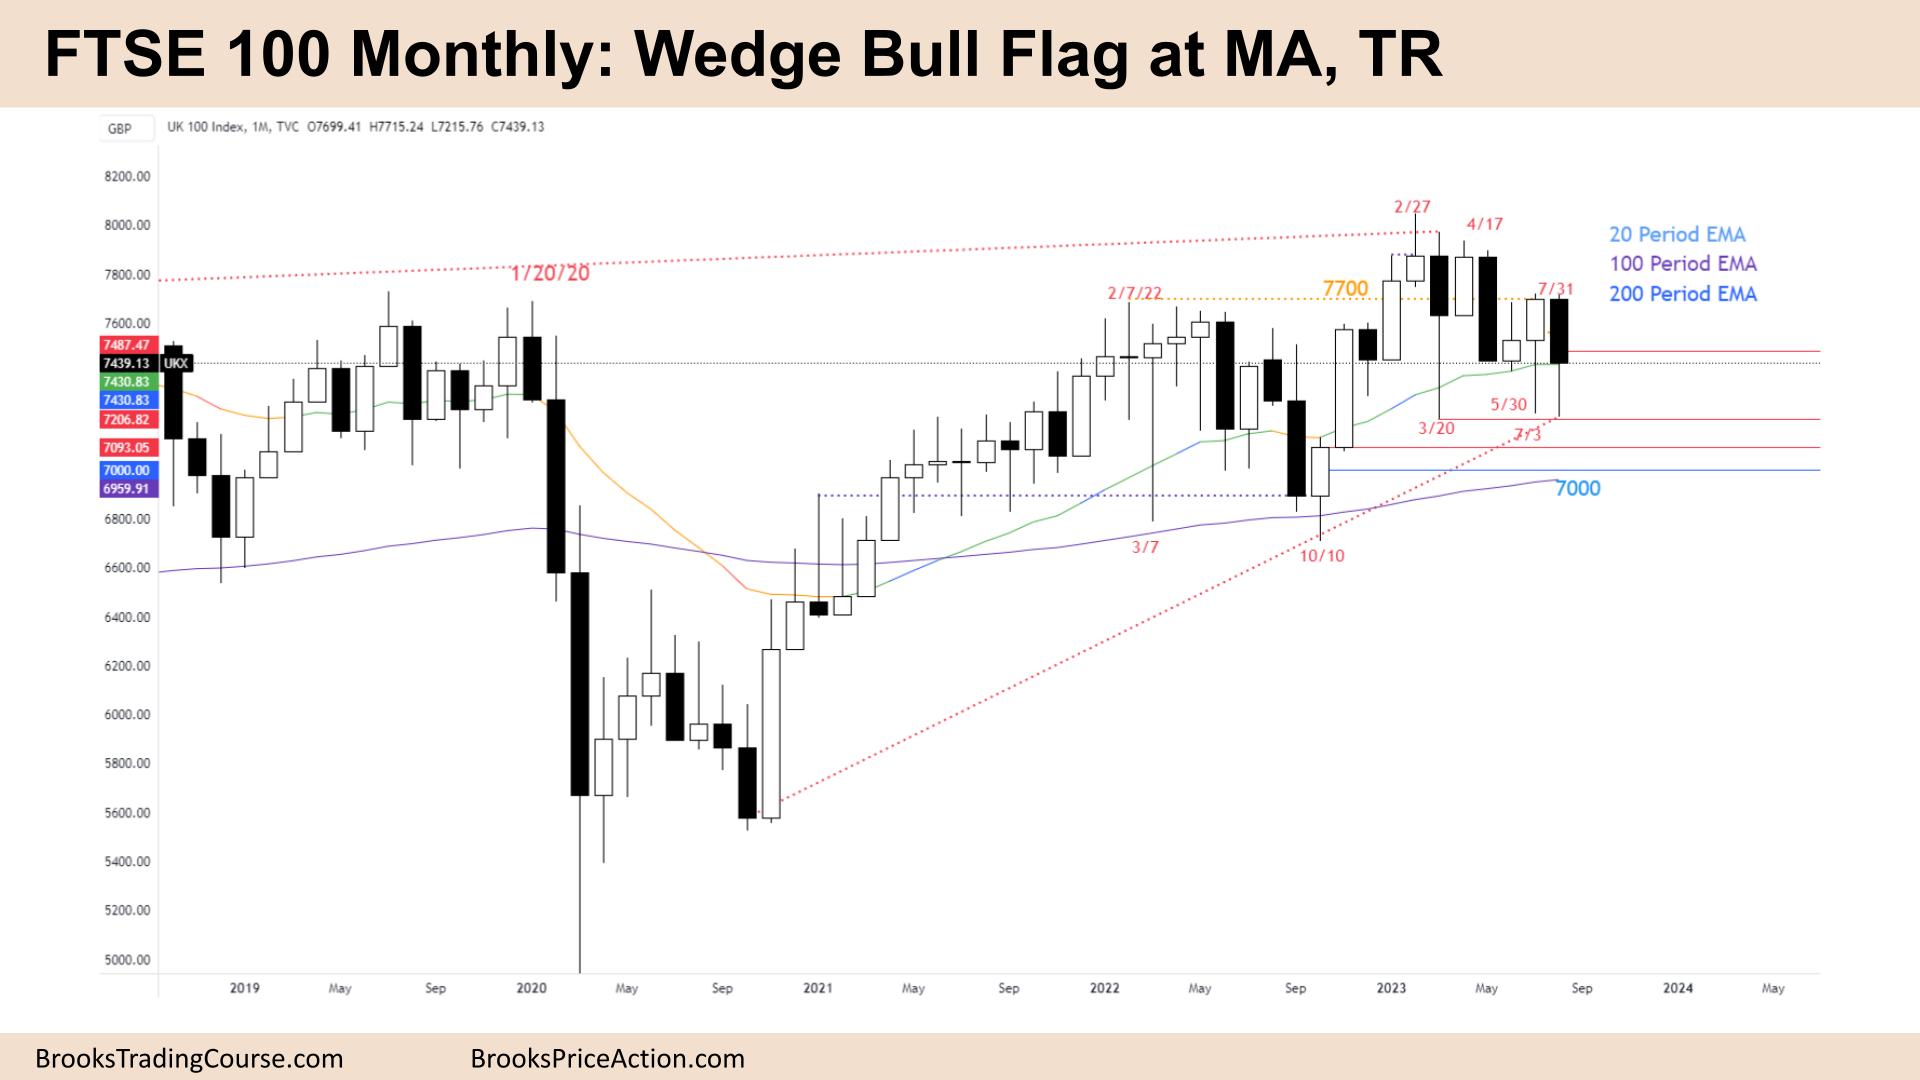 FTSE 100 Wedge Bull Flag at MA, TR